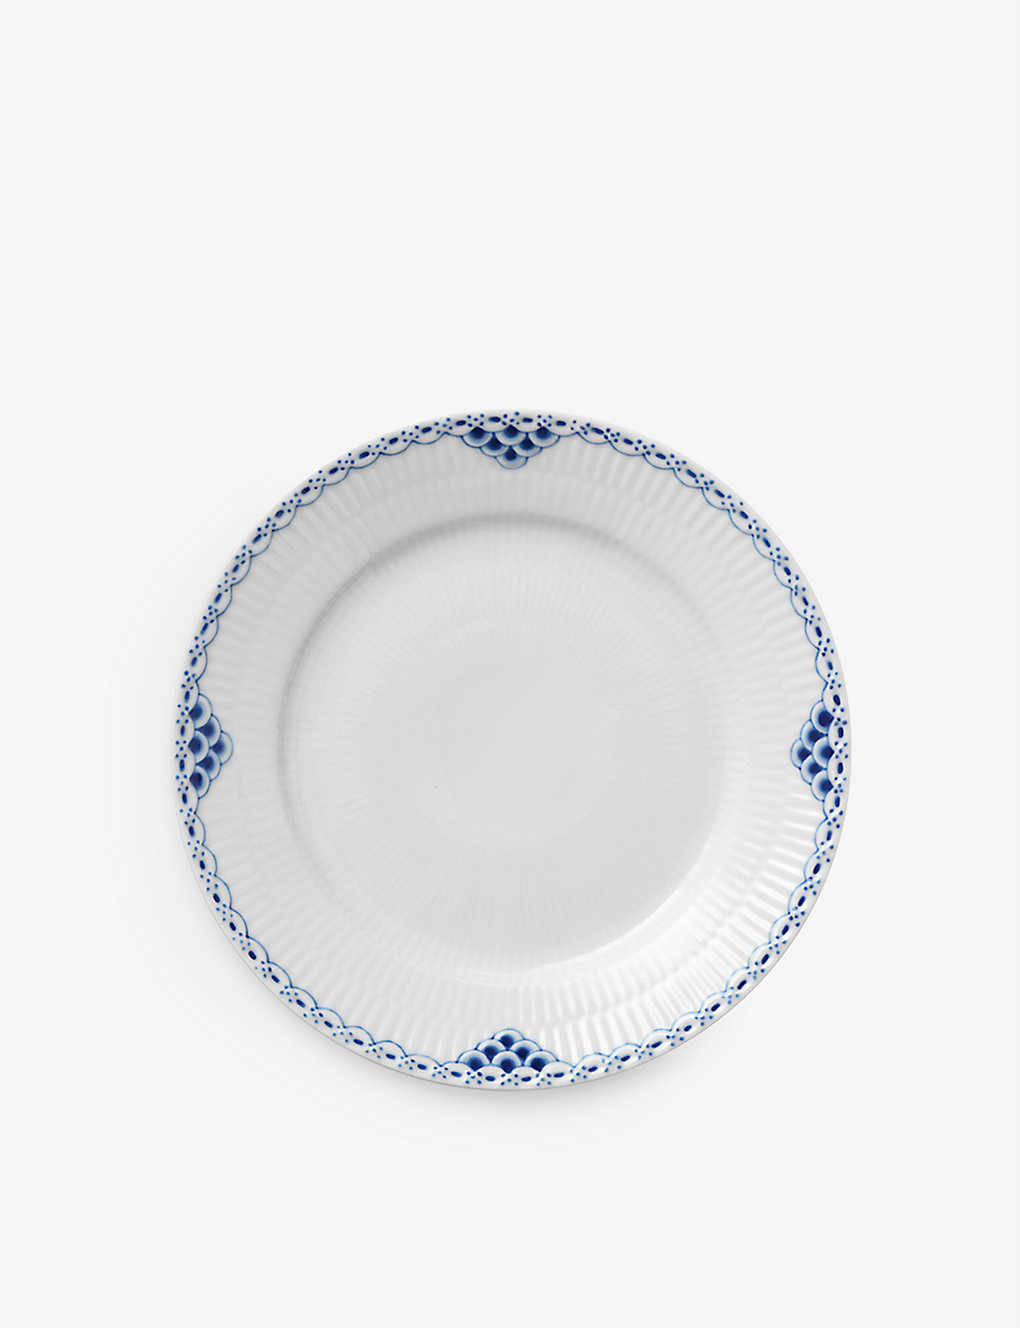 ROYAL COPENHAGEN vZX nhyCg |[ZC v[g 19cm Princess hand-painted porcelain plate 19cm